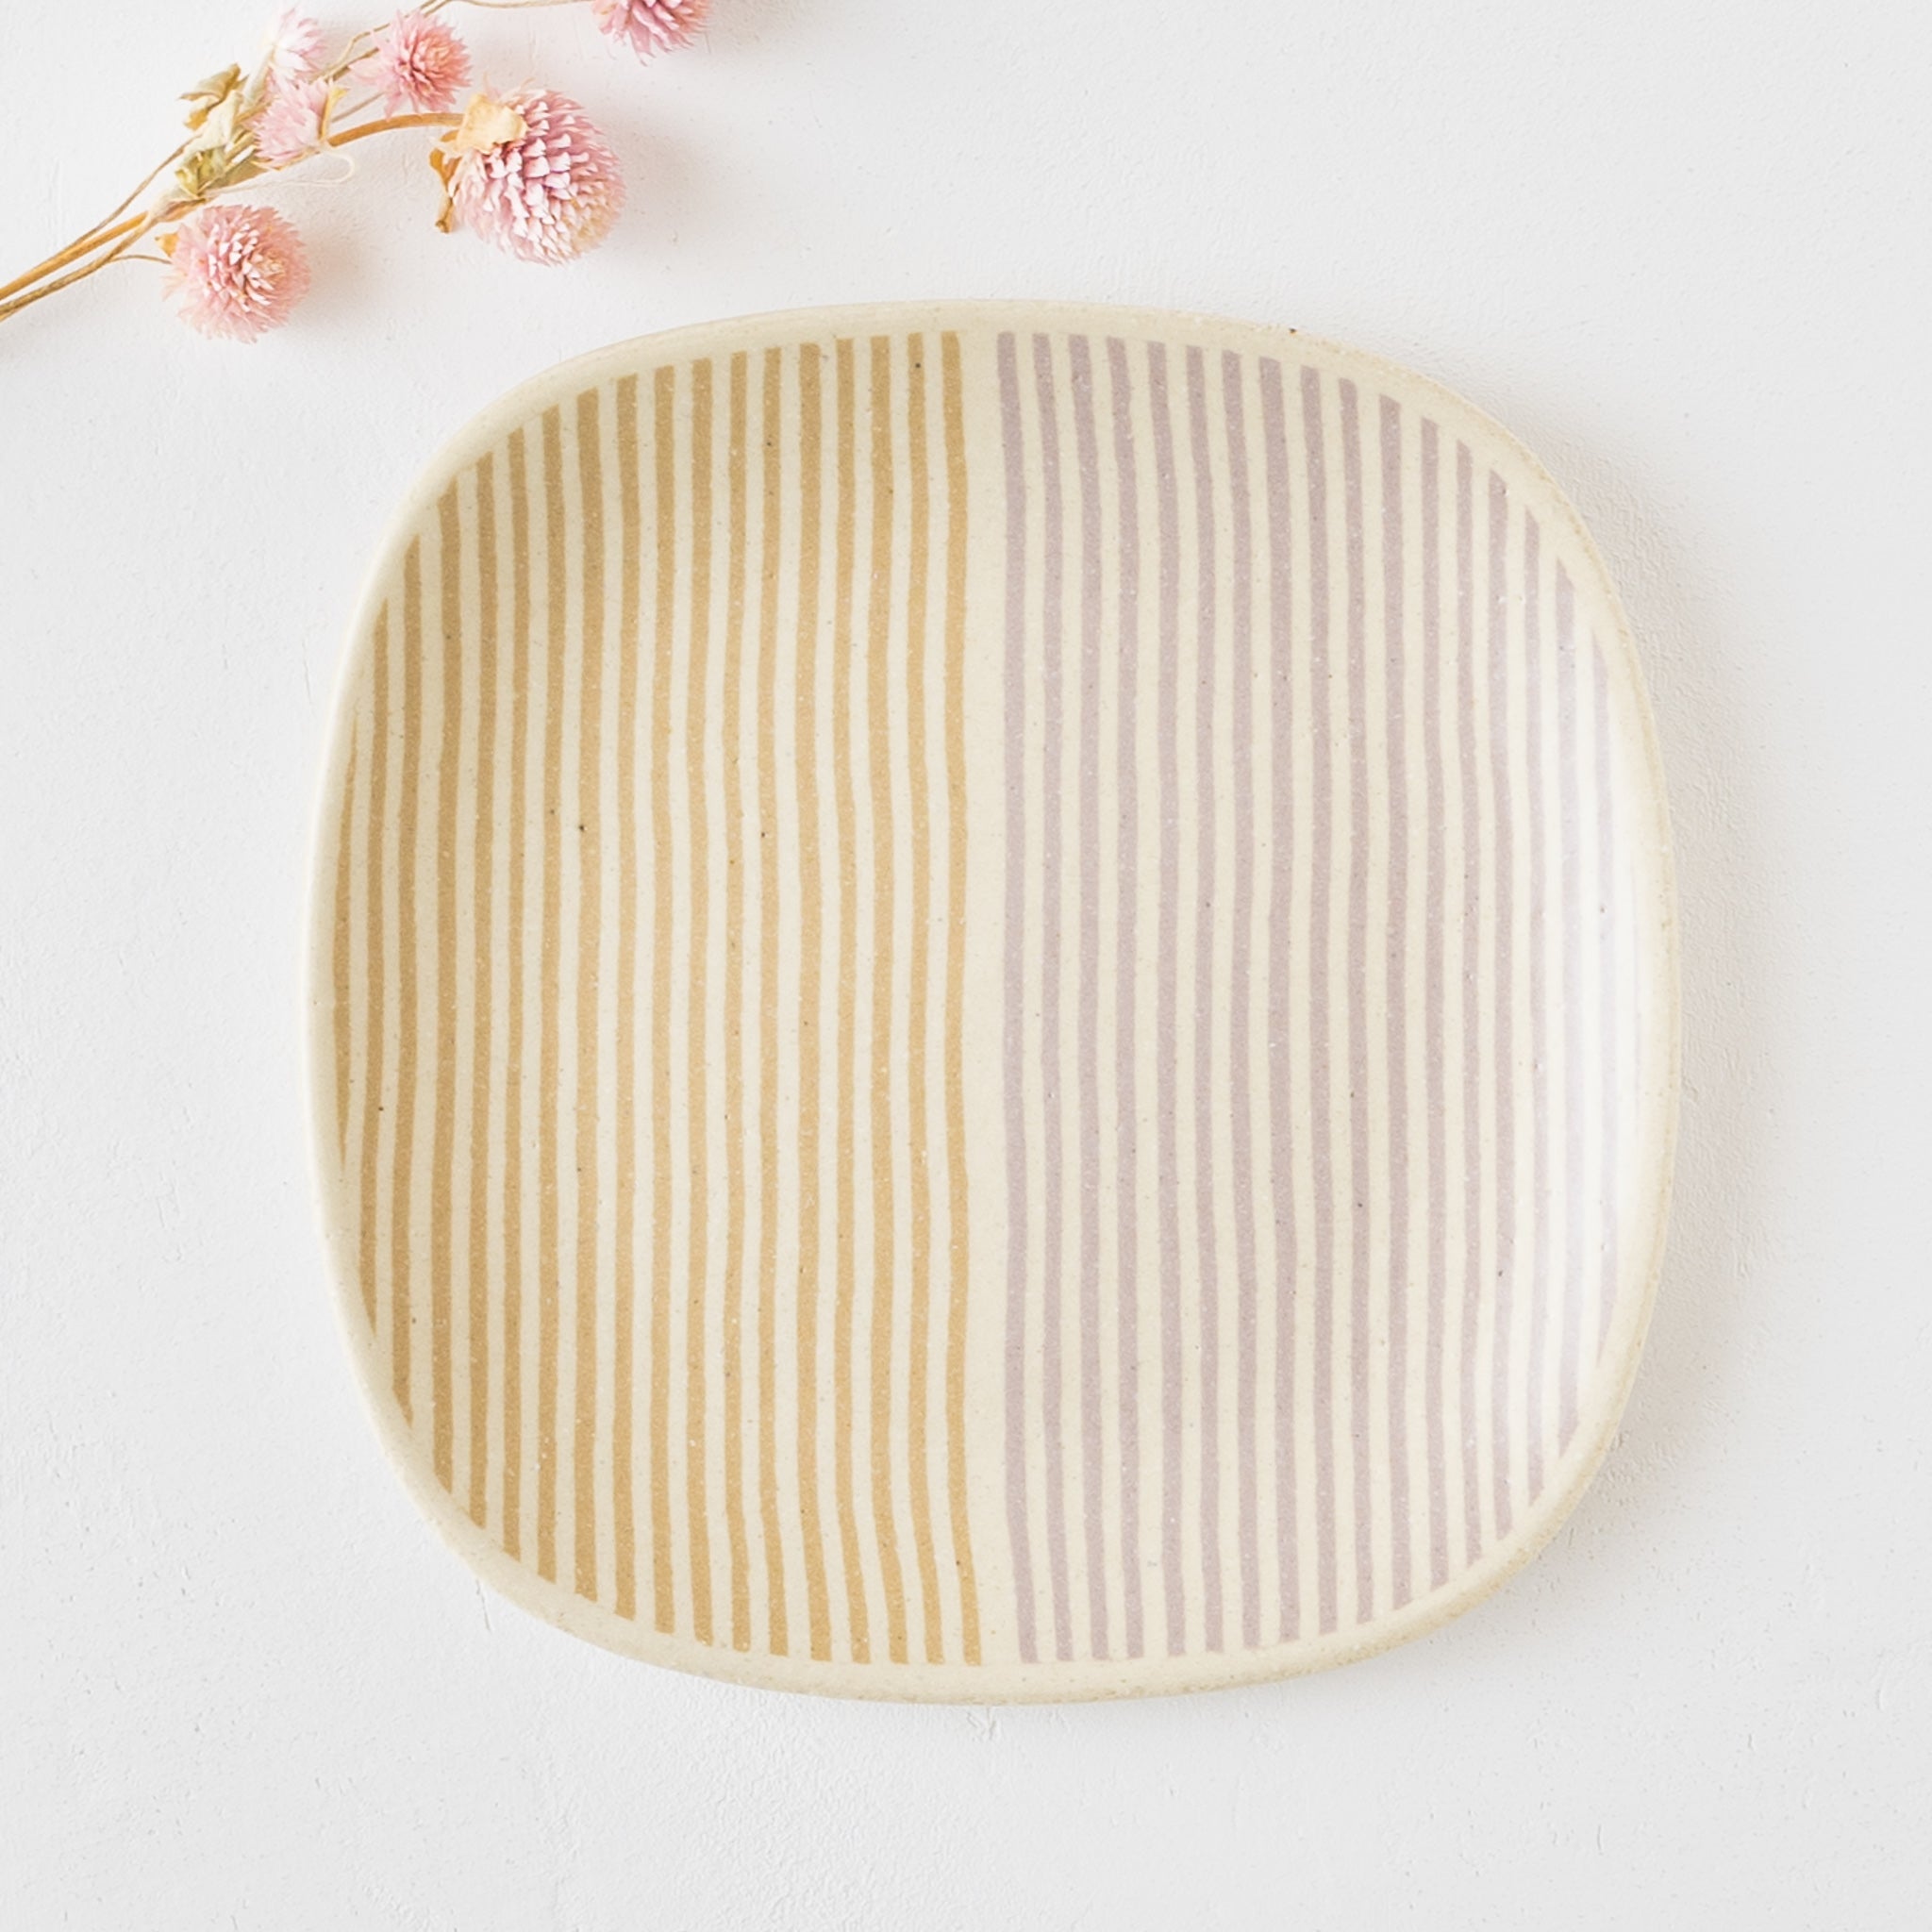 Cute square plate by Hanako Sakashita